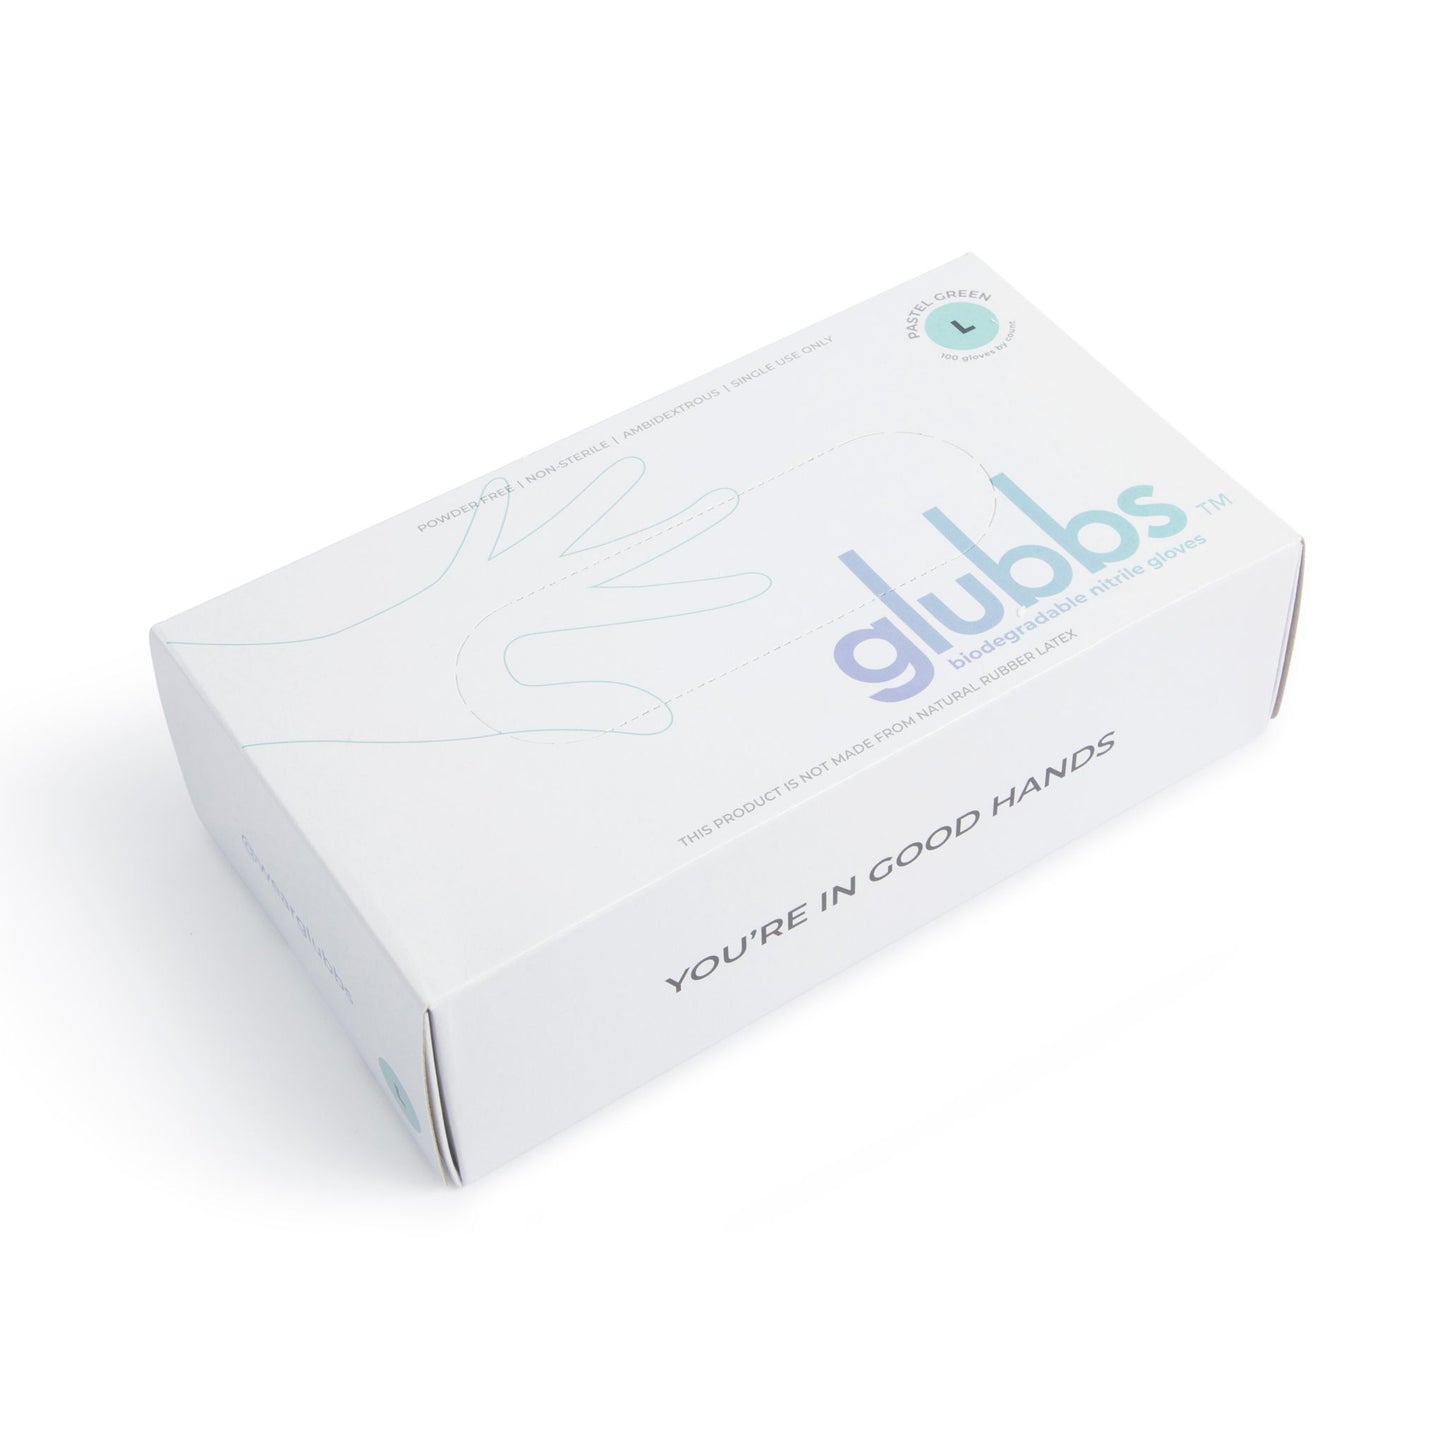 Glubbs - Biodegradable Nitrile Gloves (1 box x 100 gloves)